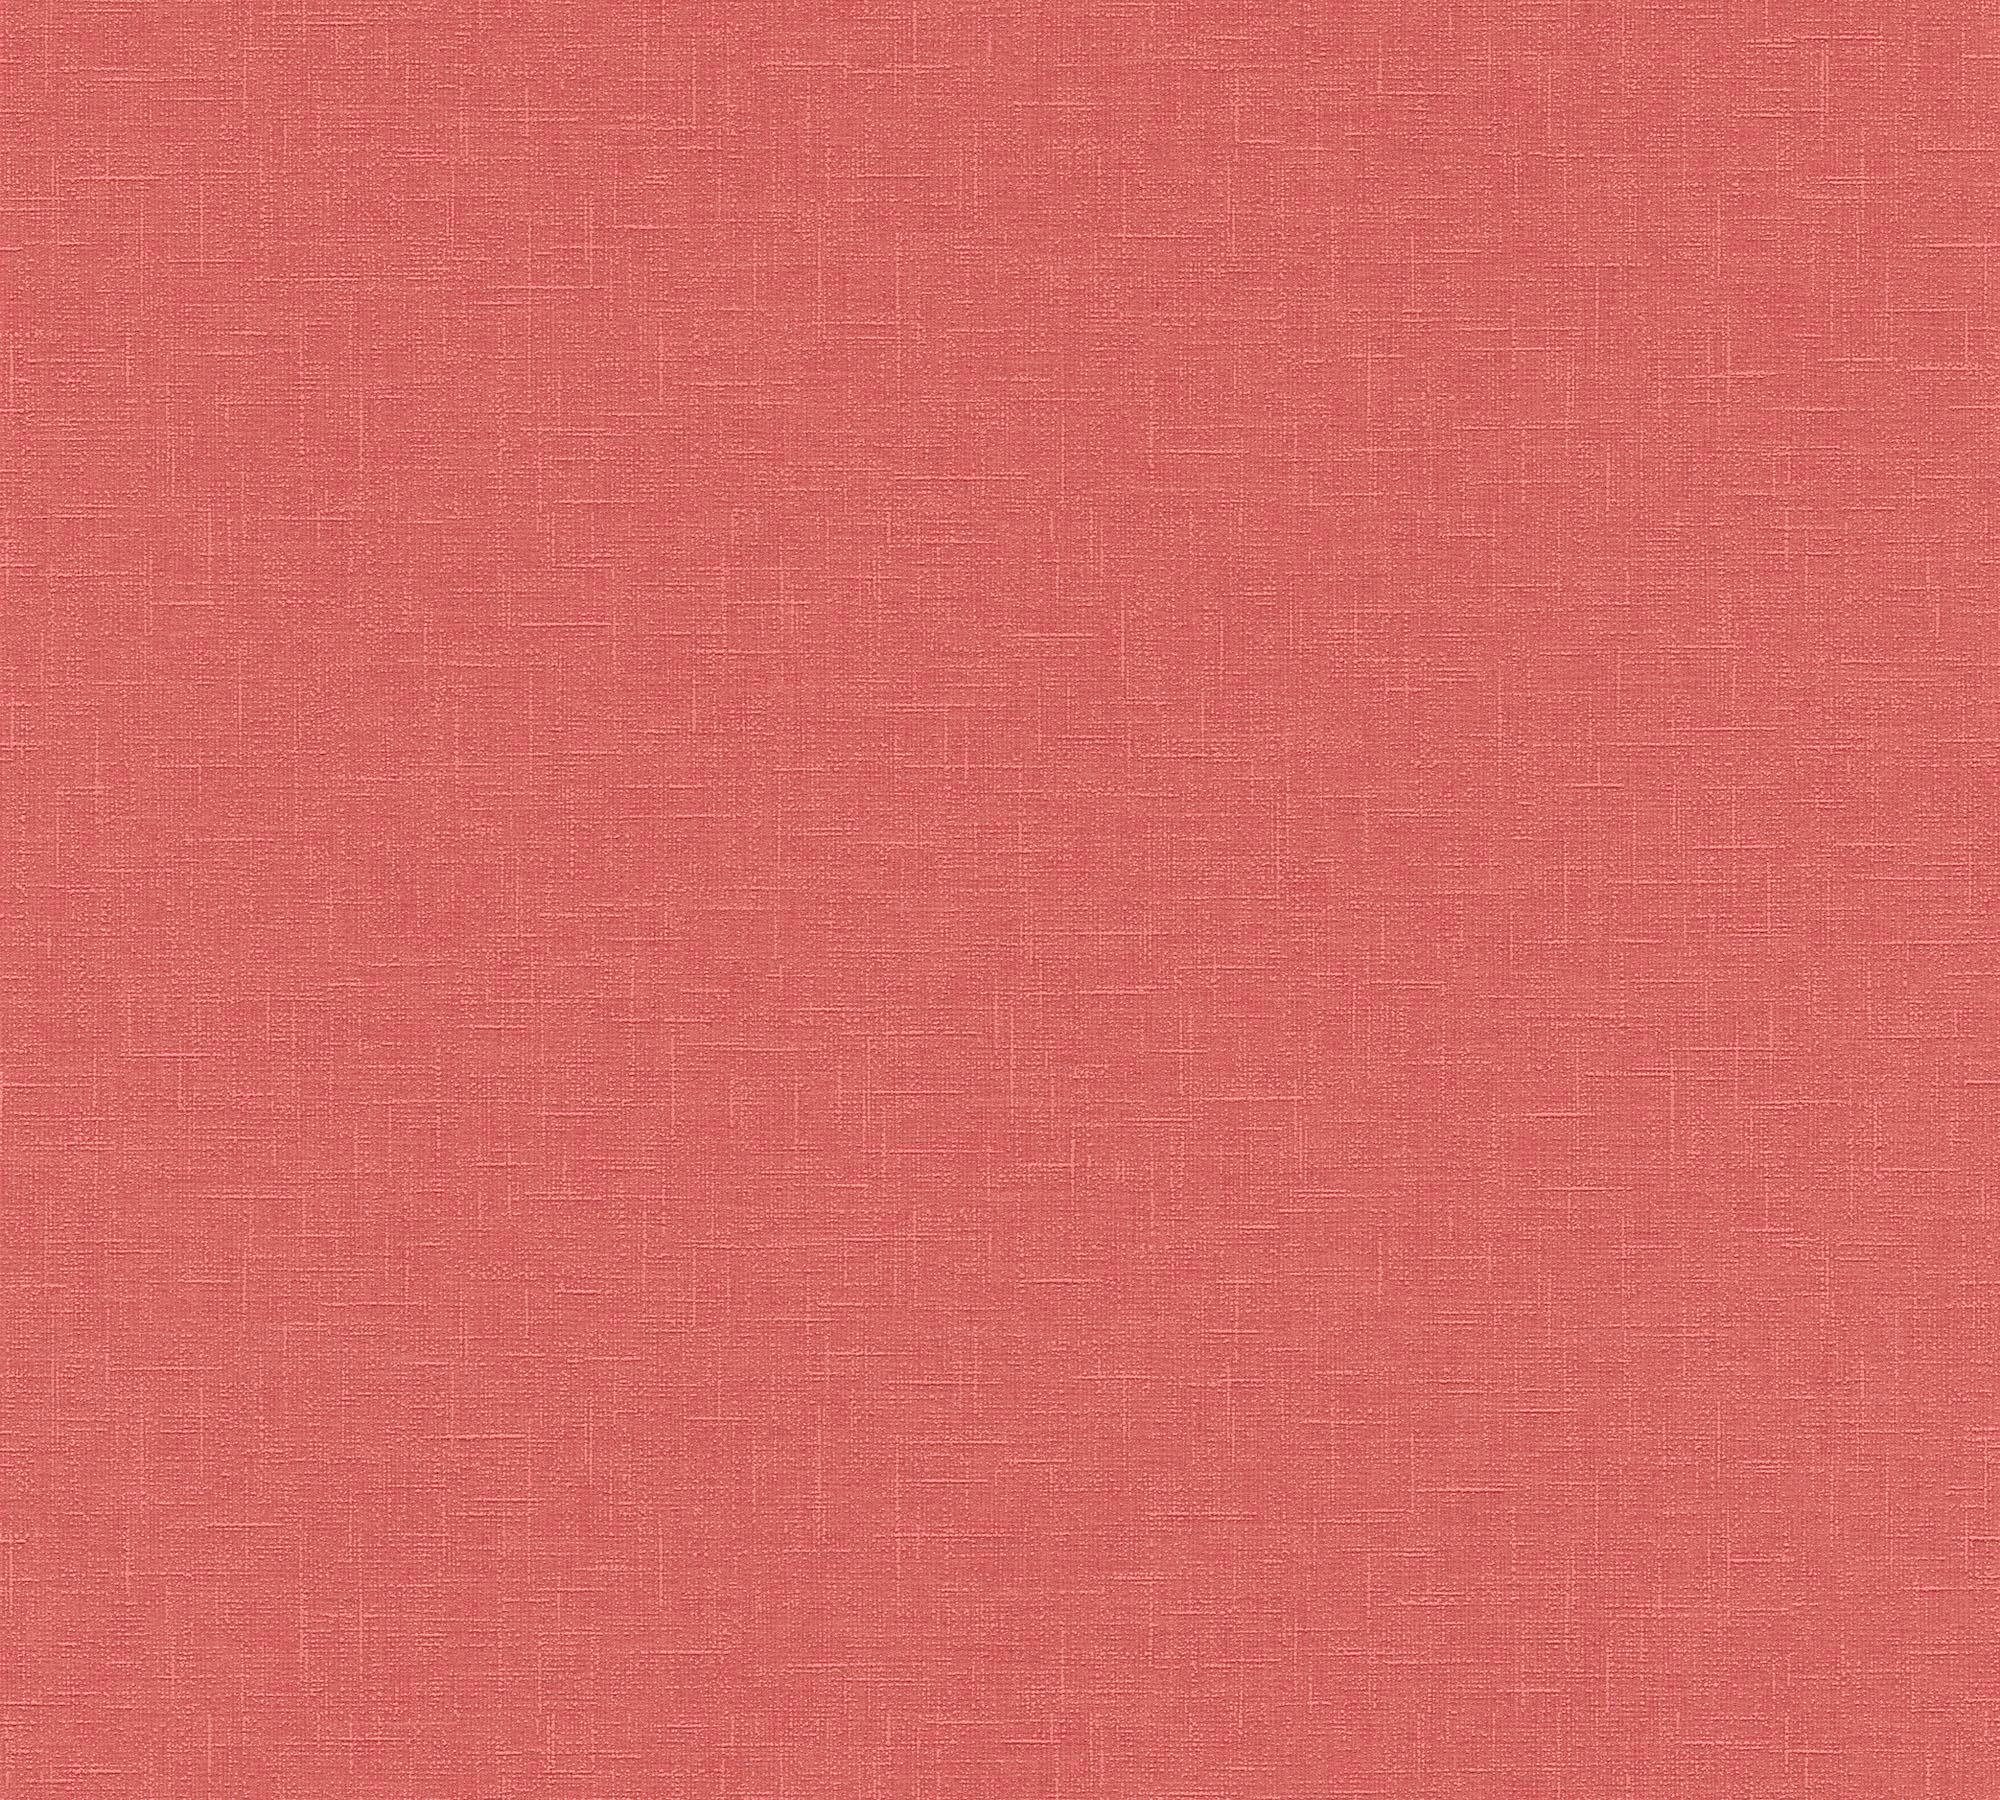 Vliestapete Linen Style, uni walls einfarbig, living rot